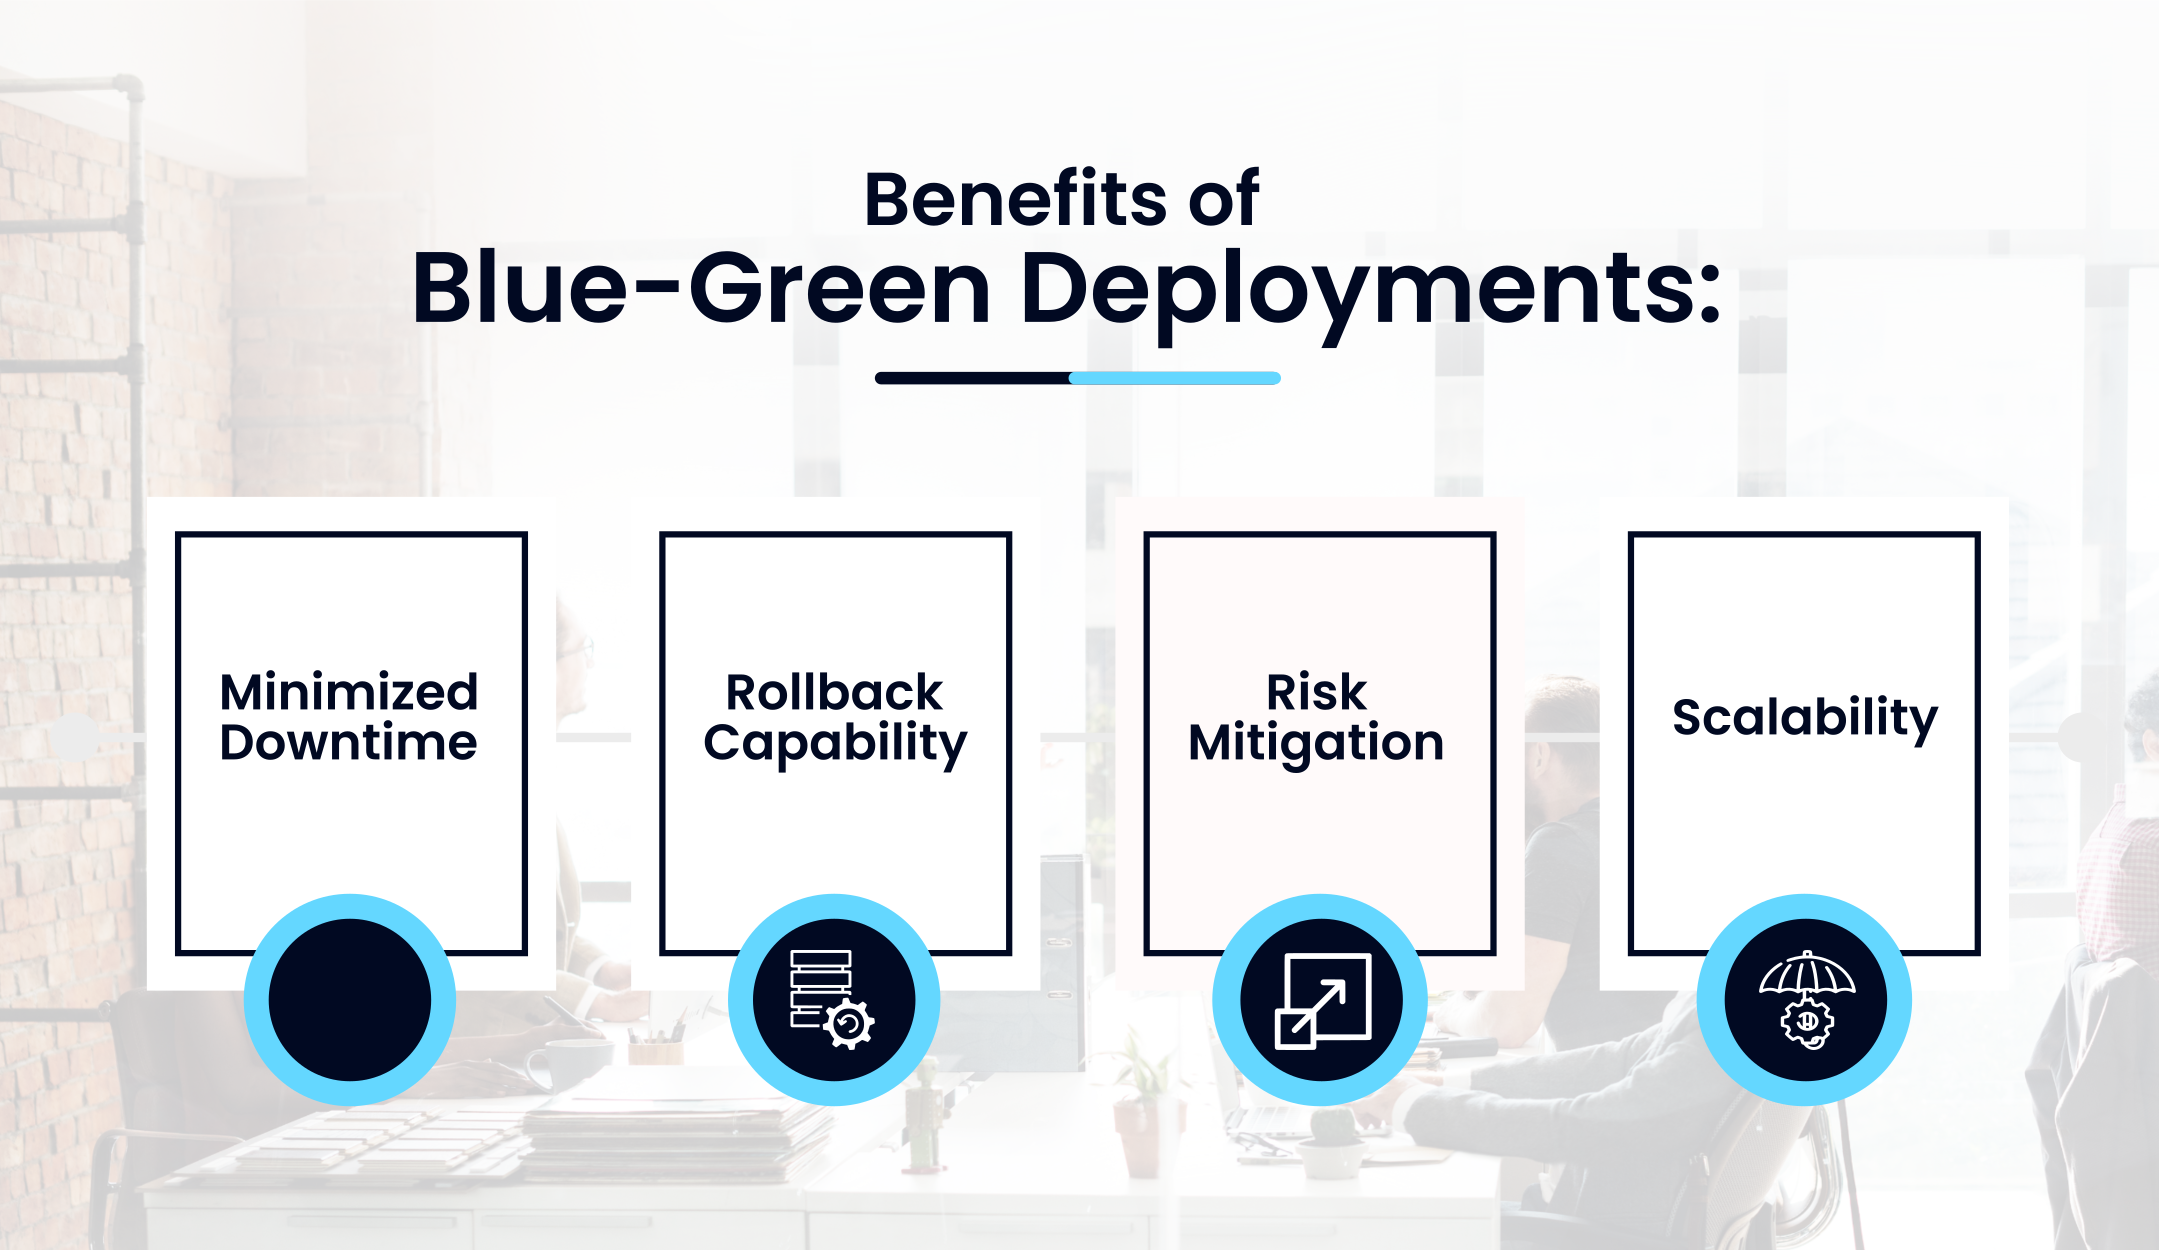 Benefits of Blue-Green Deployments